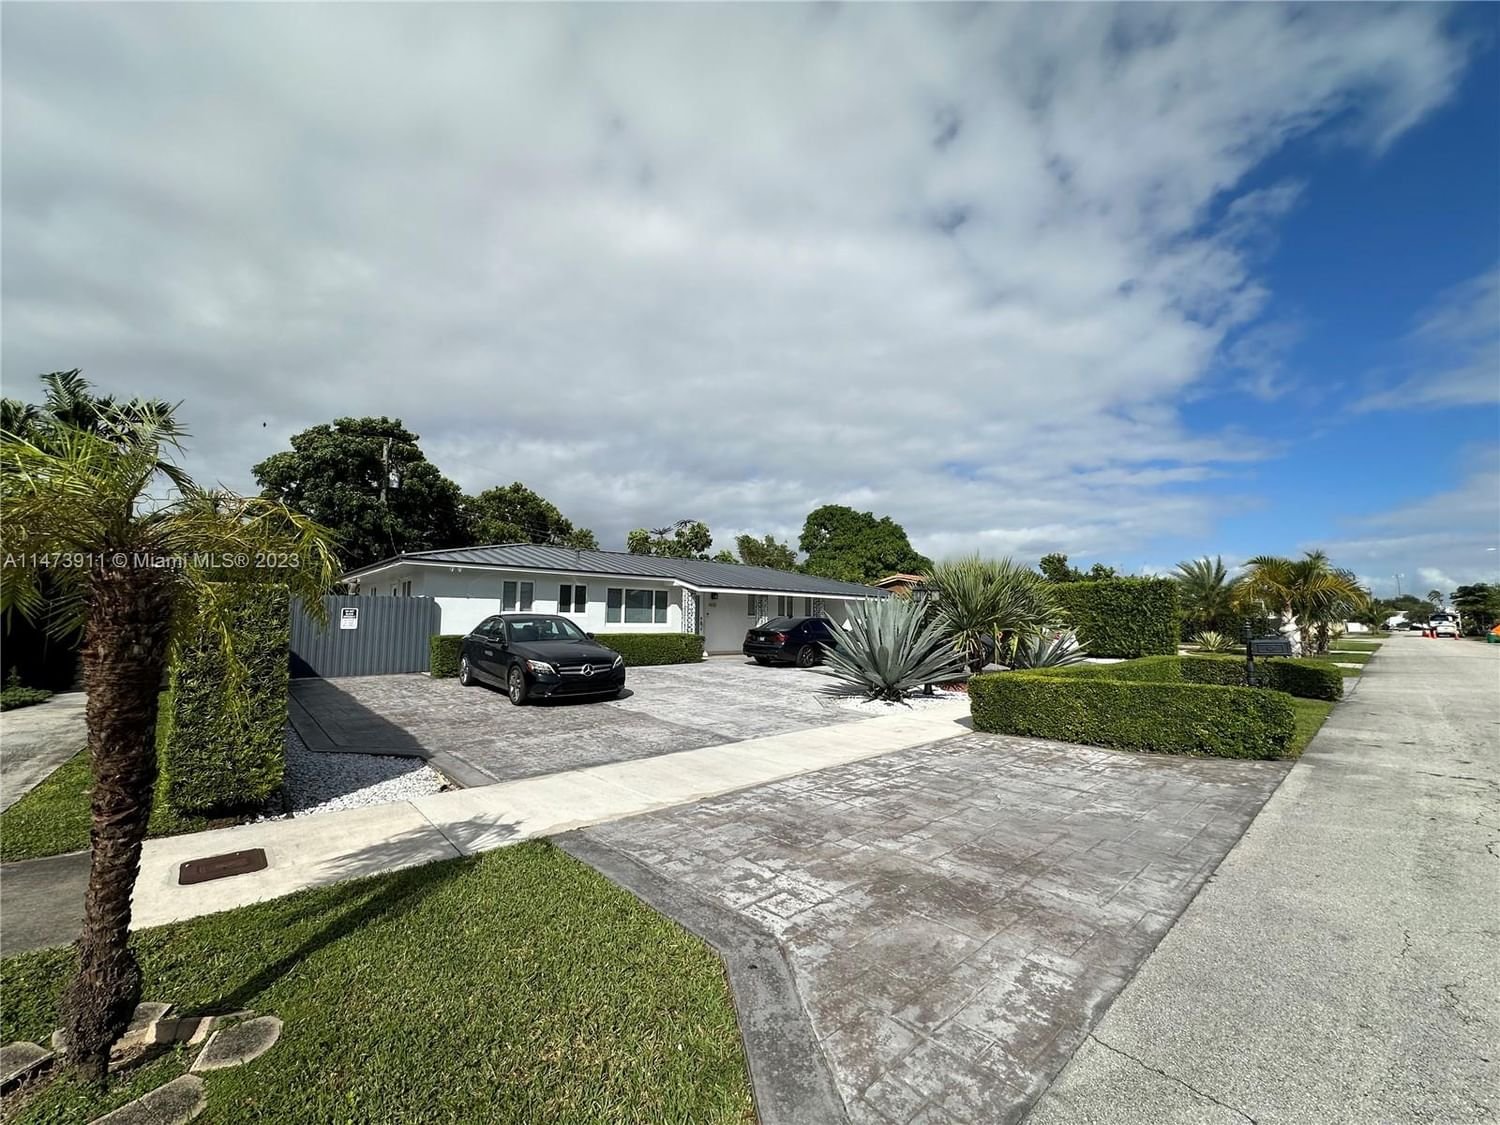 Real estate property located at 4610 89th Pl, Miami-Dade County, Miami, FL